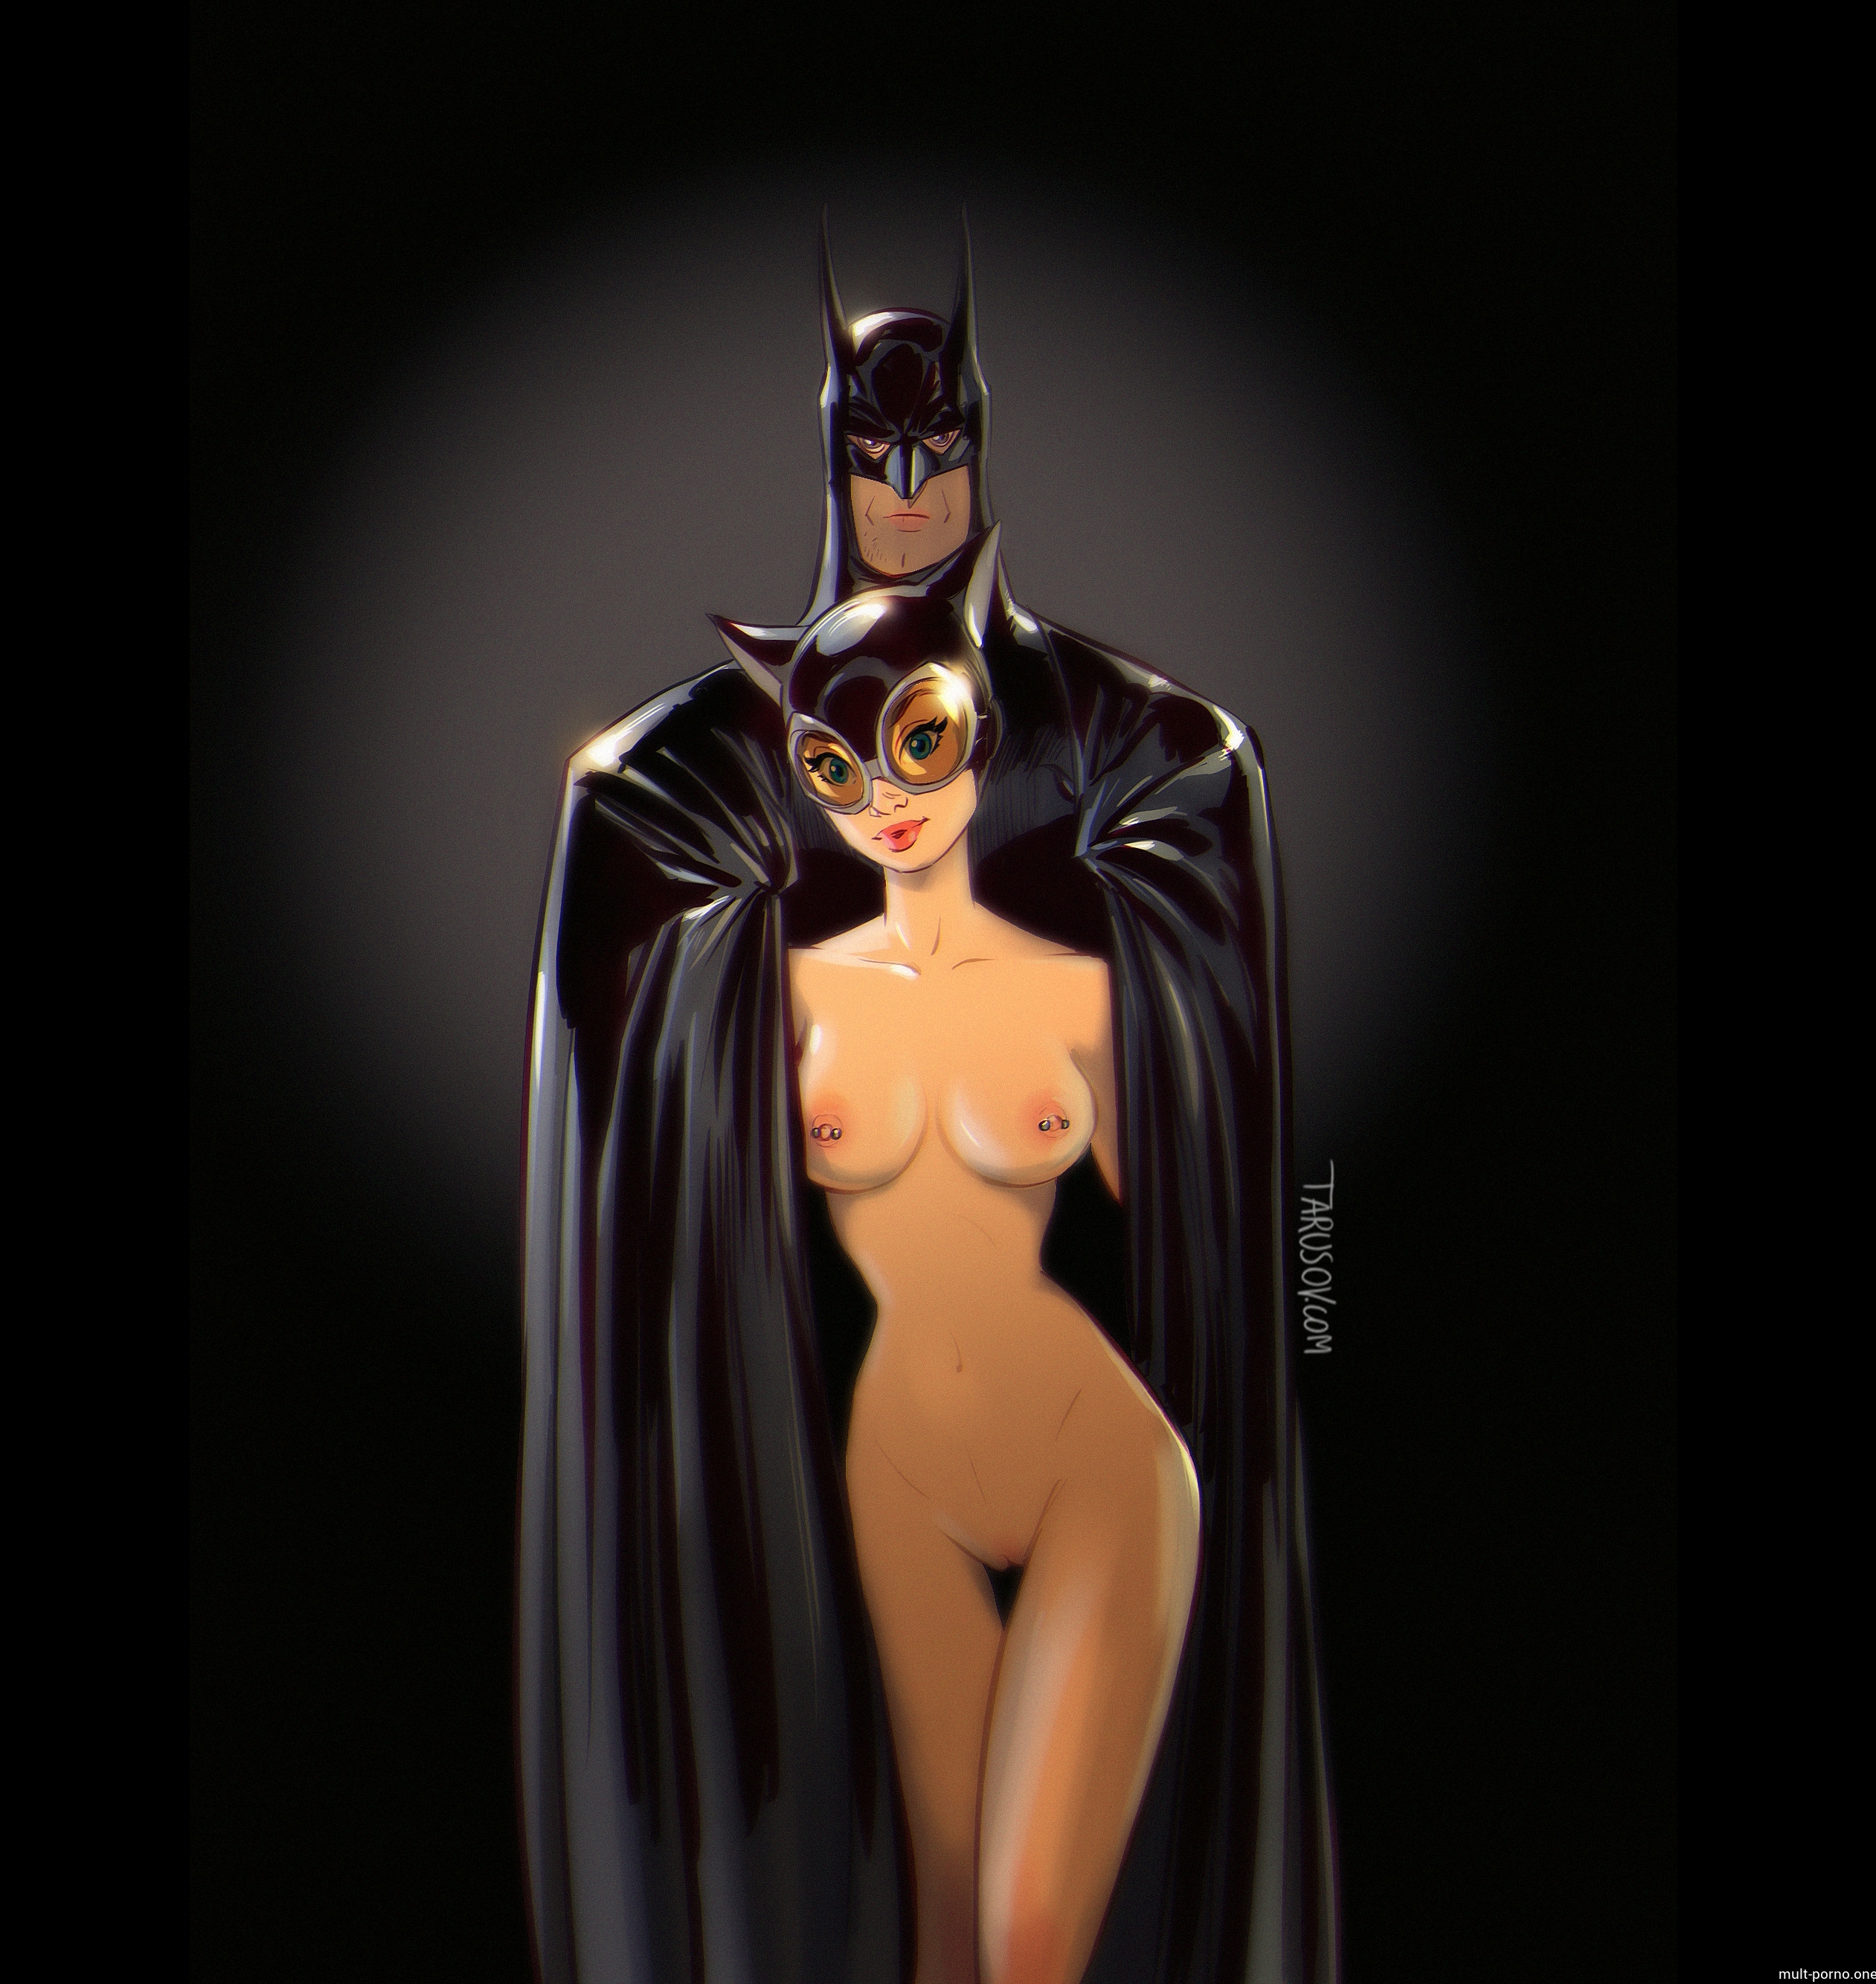 Batman fucks Catwoman's juicy ass right in the costume (+porn comics)